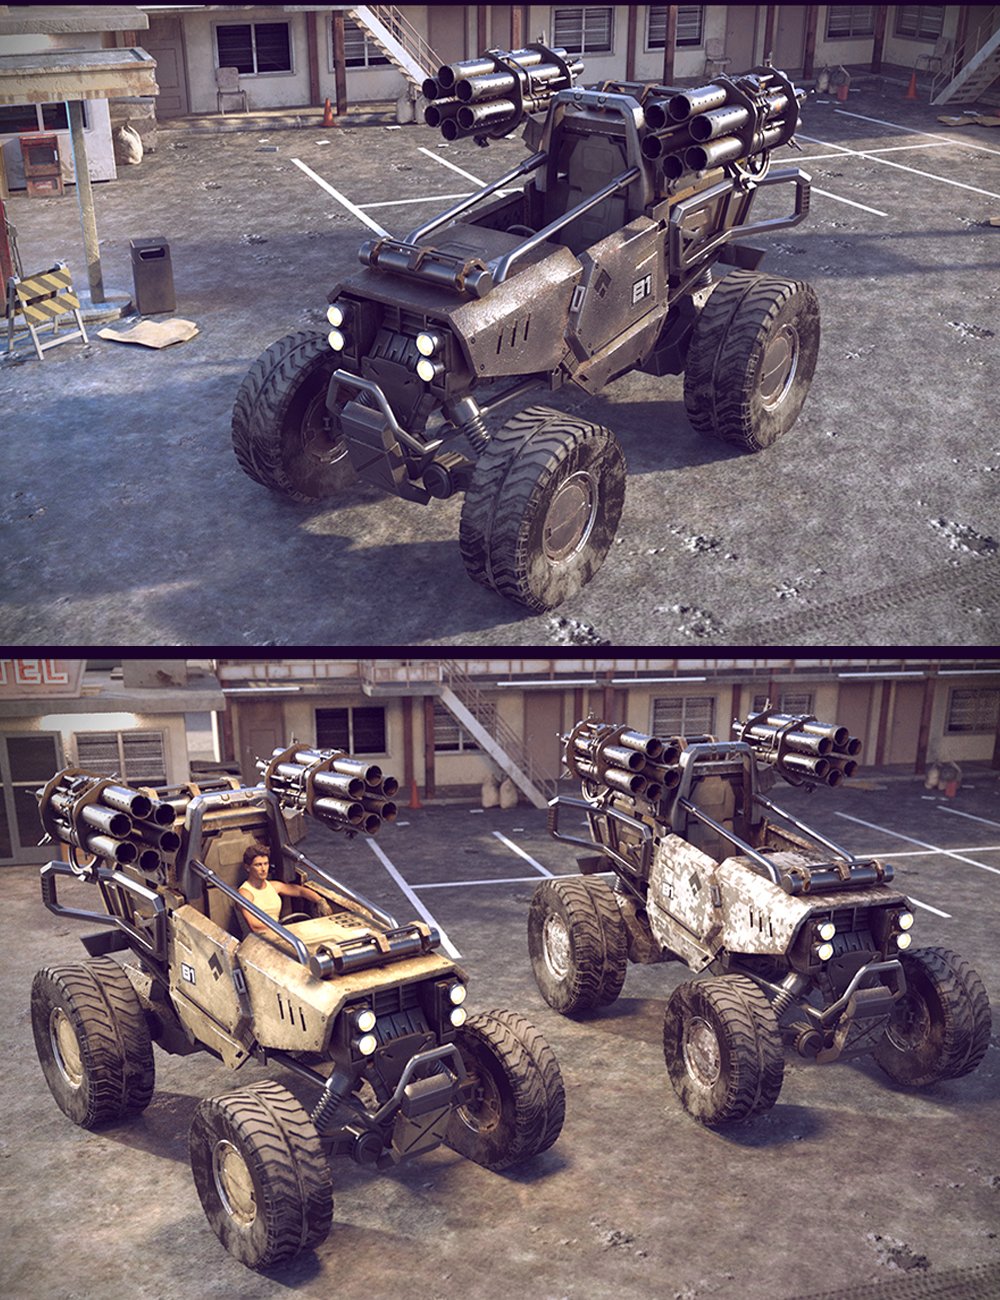 BTT Buggy Vehicle by: Polish, 3D Models by Daz 3D